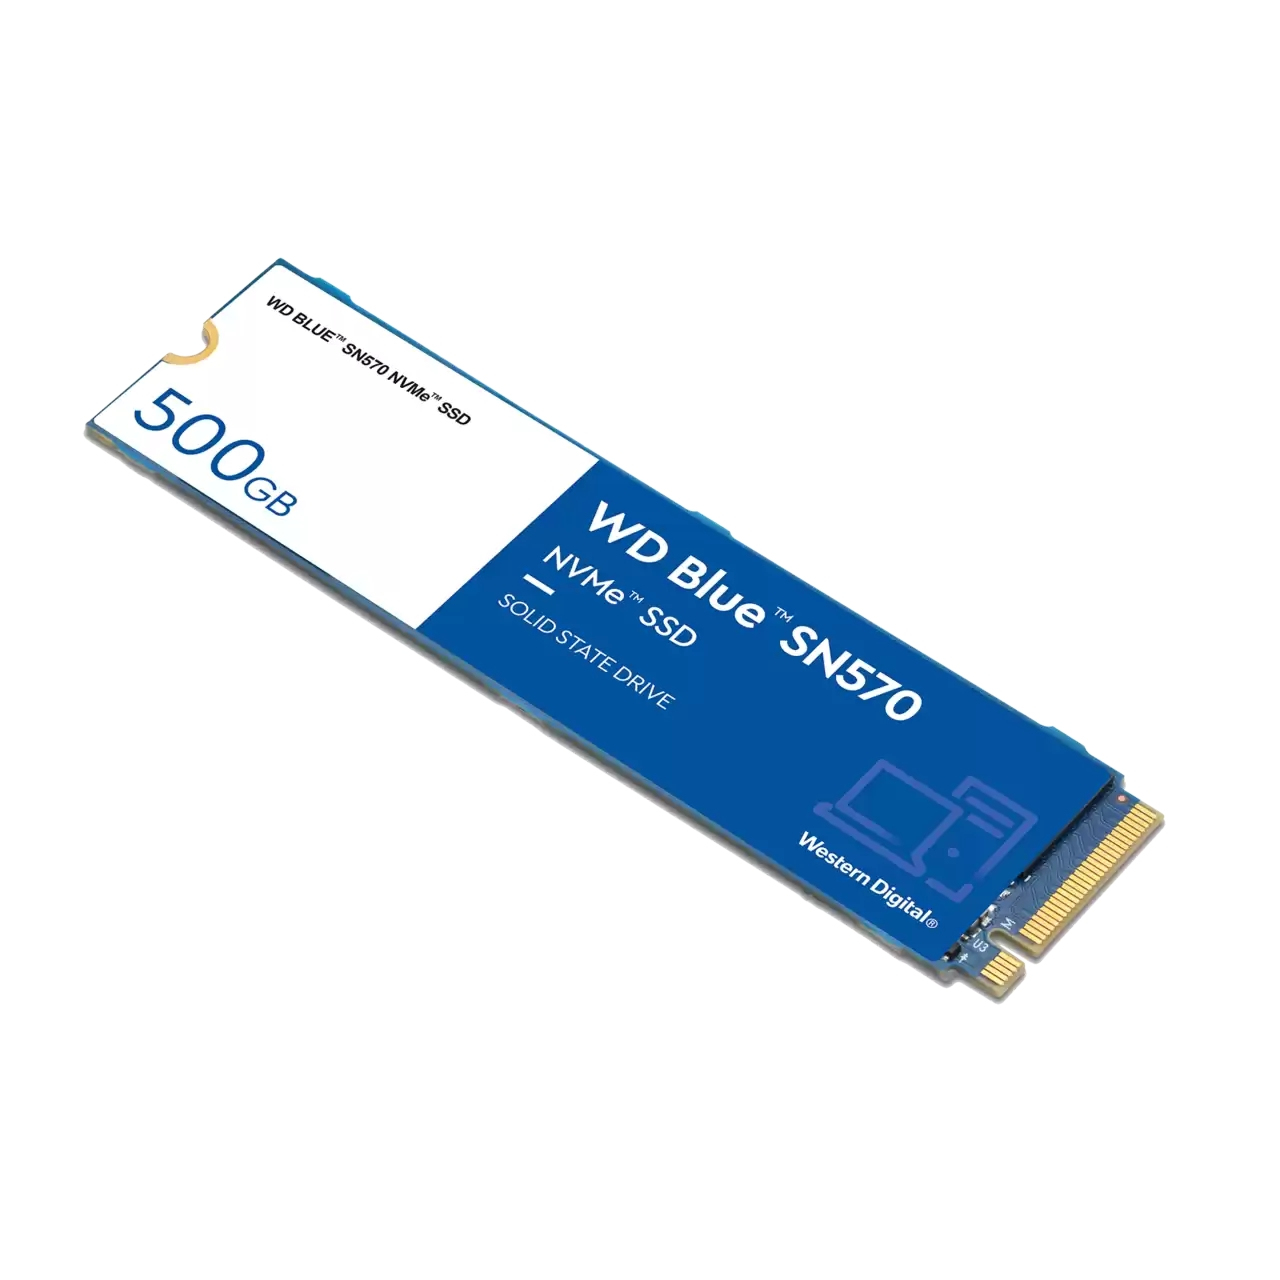 SSD Western Digital WD Blue SN570 M.2 500 GB PCI Express 3.0 NVMe [WDS500G3B0C]